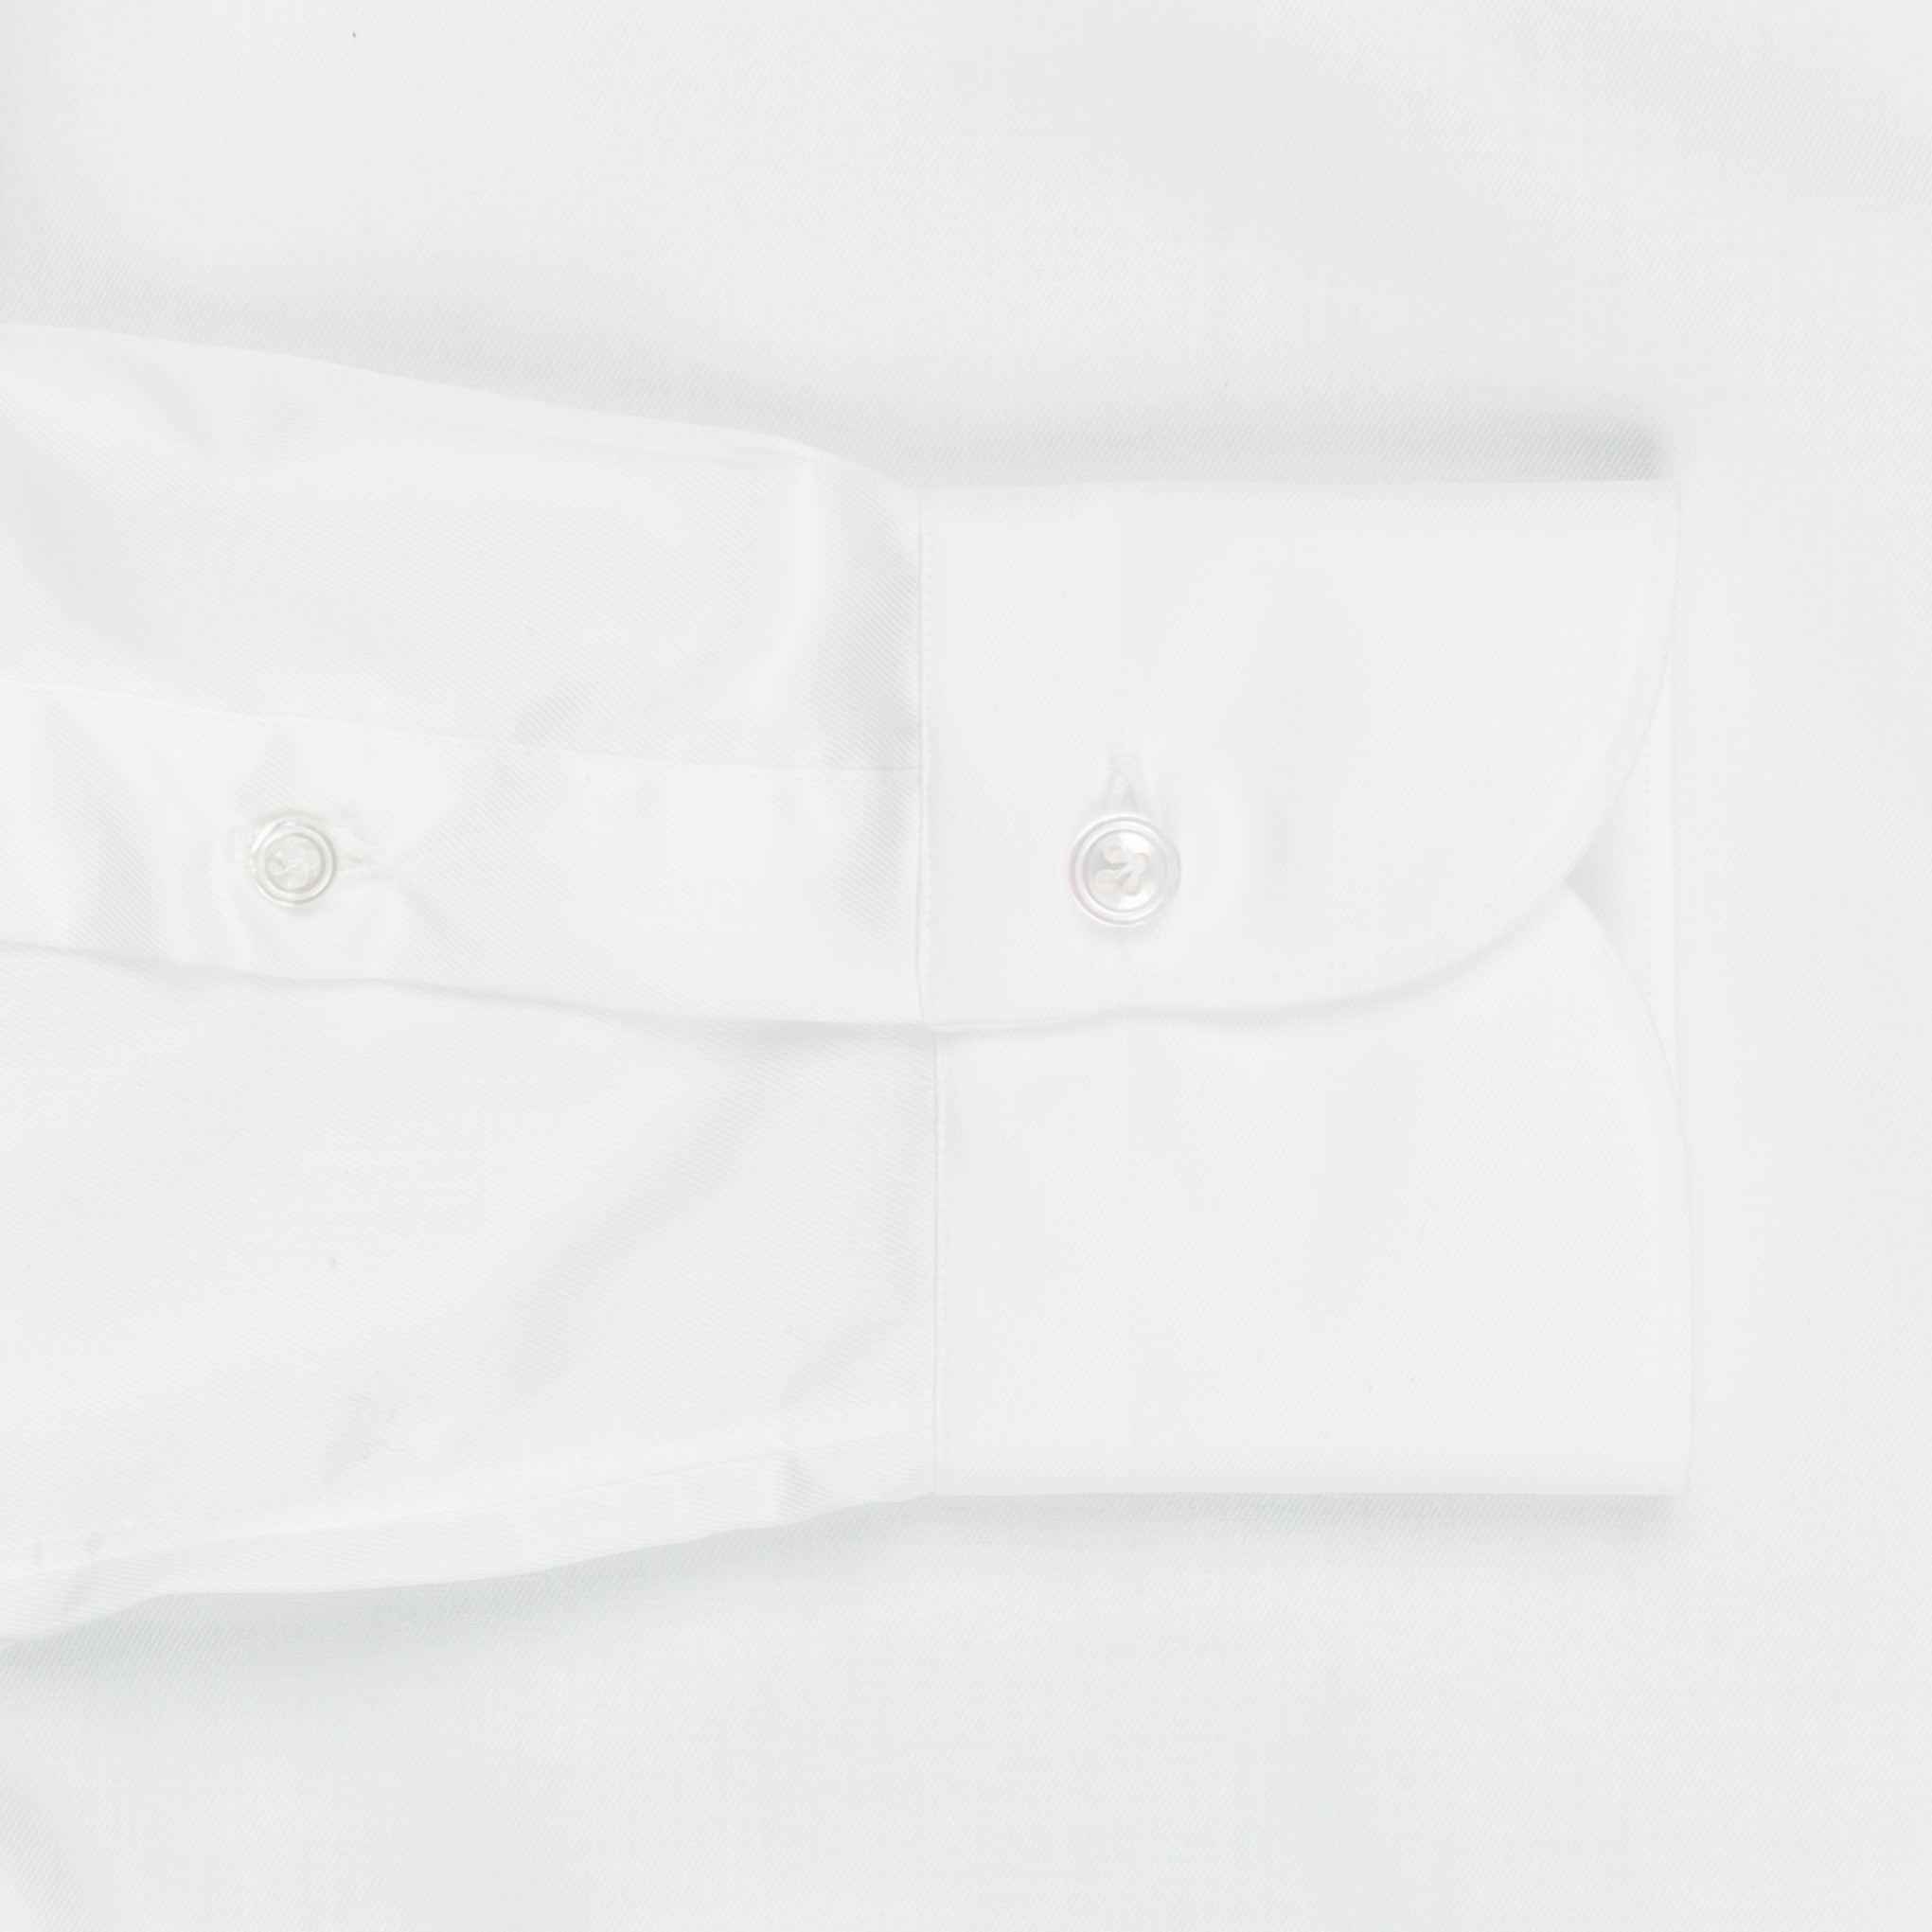 Finamore &#39;Traveller&#39; Shirt Milano Fit Collar Eduardo White Alumo twill